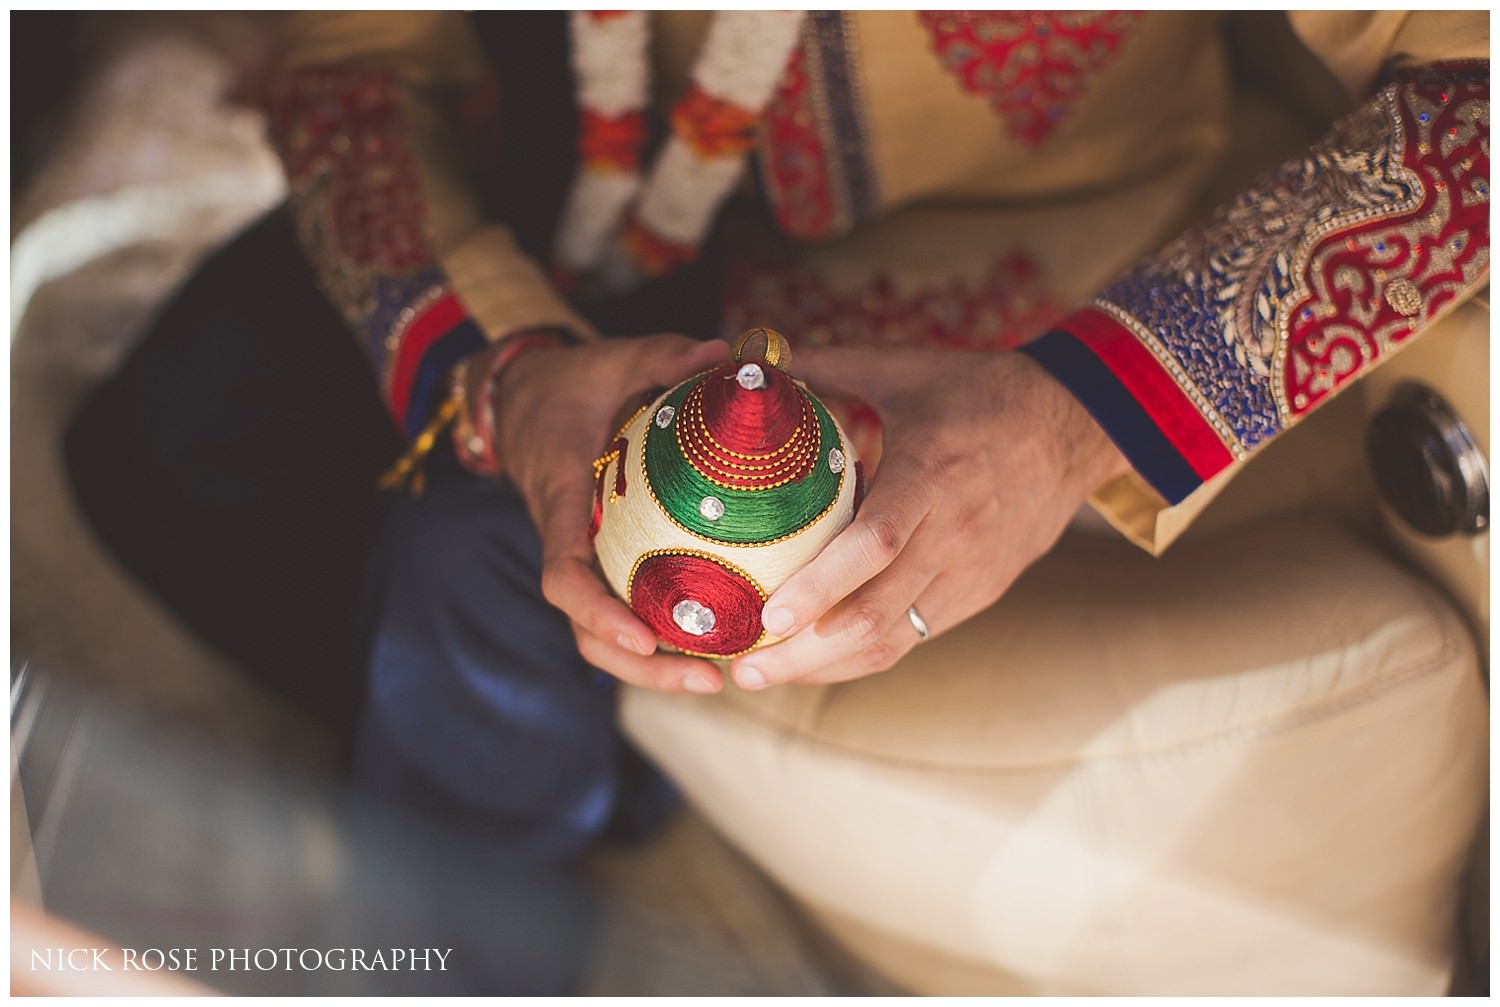  Hindu wedding ritual at Canary Wharf's East Wintergarden 